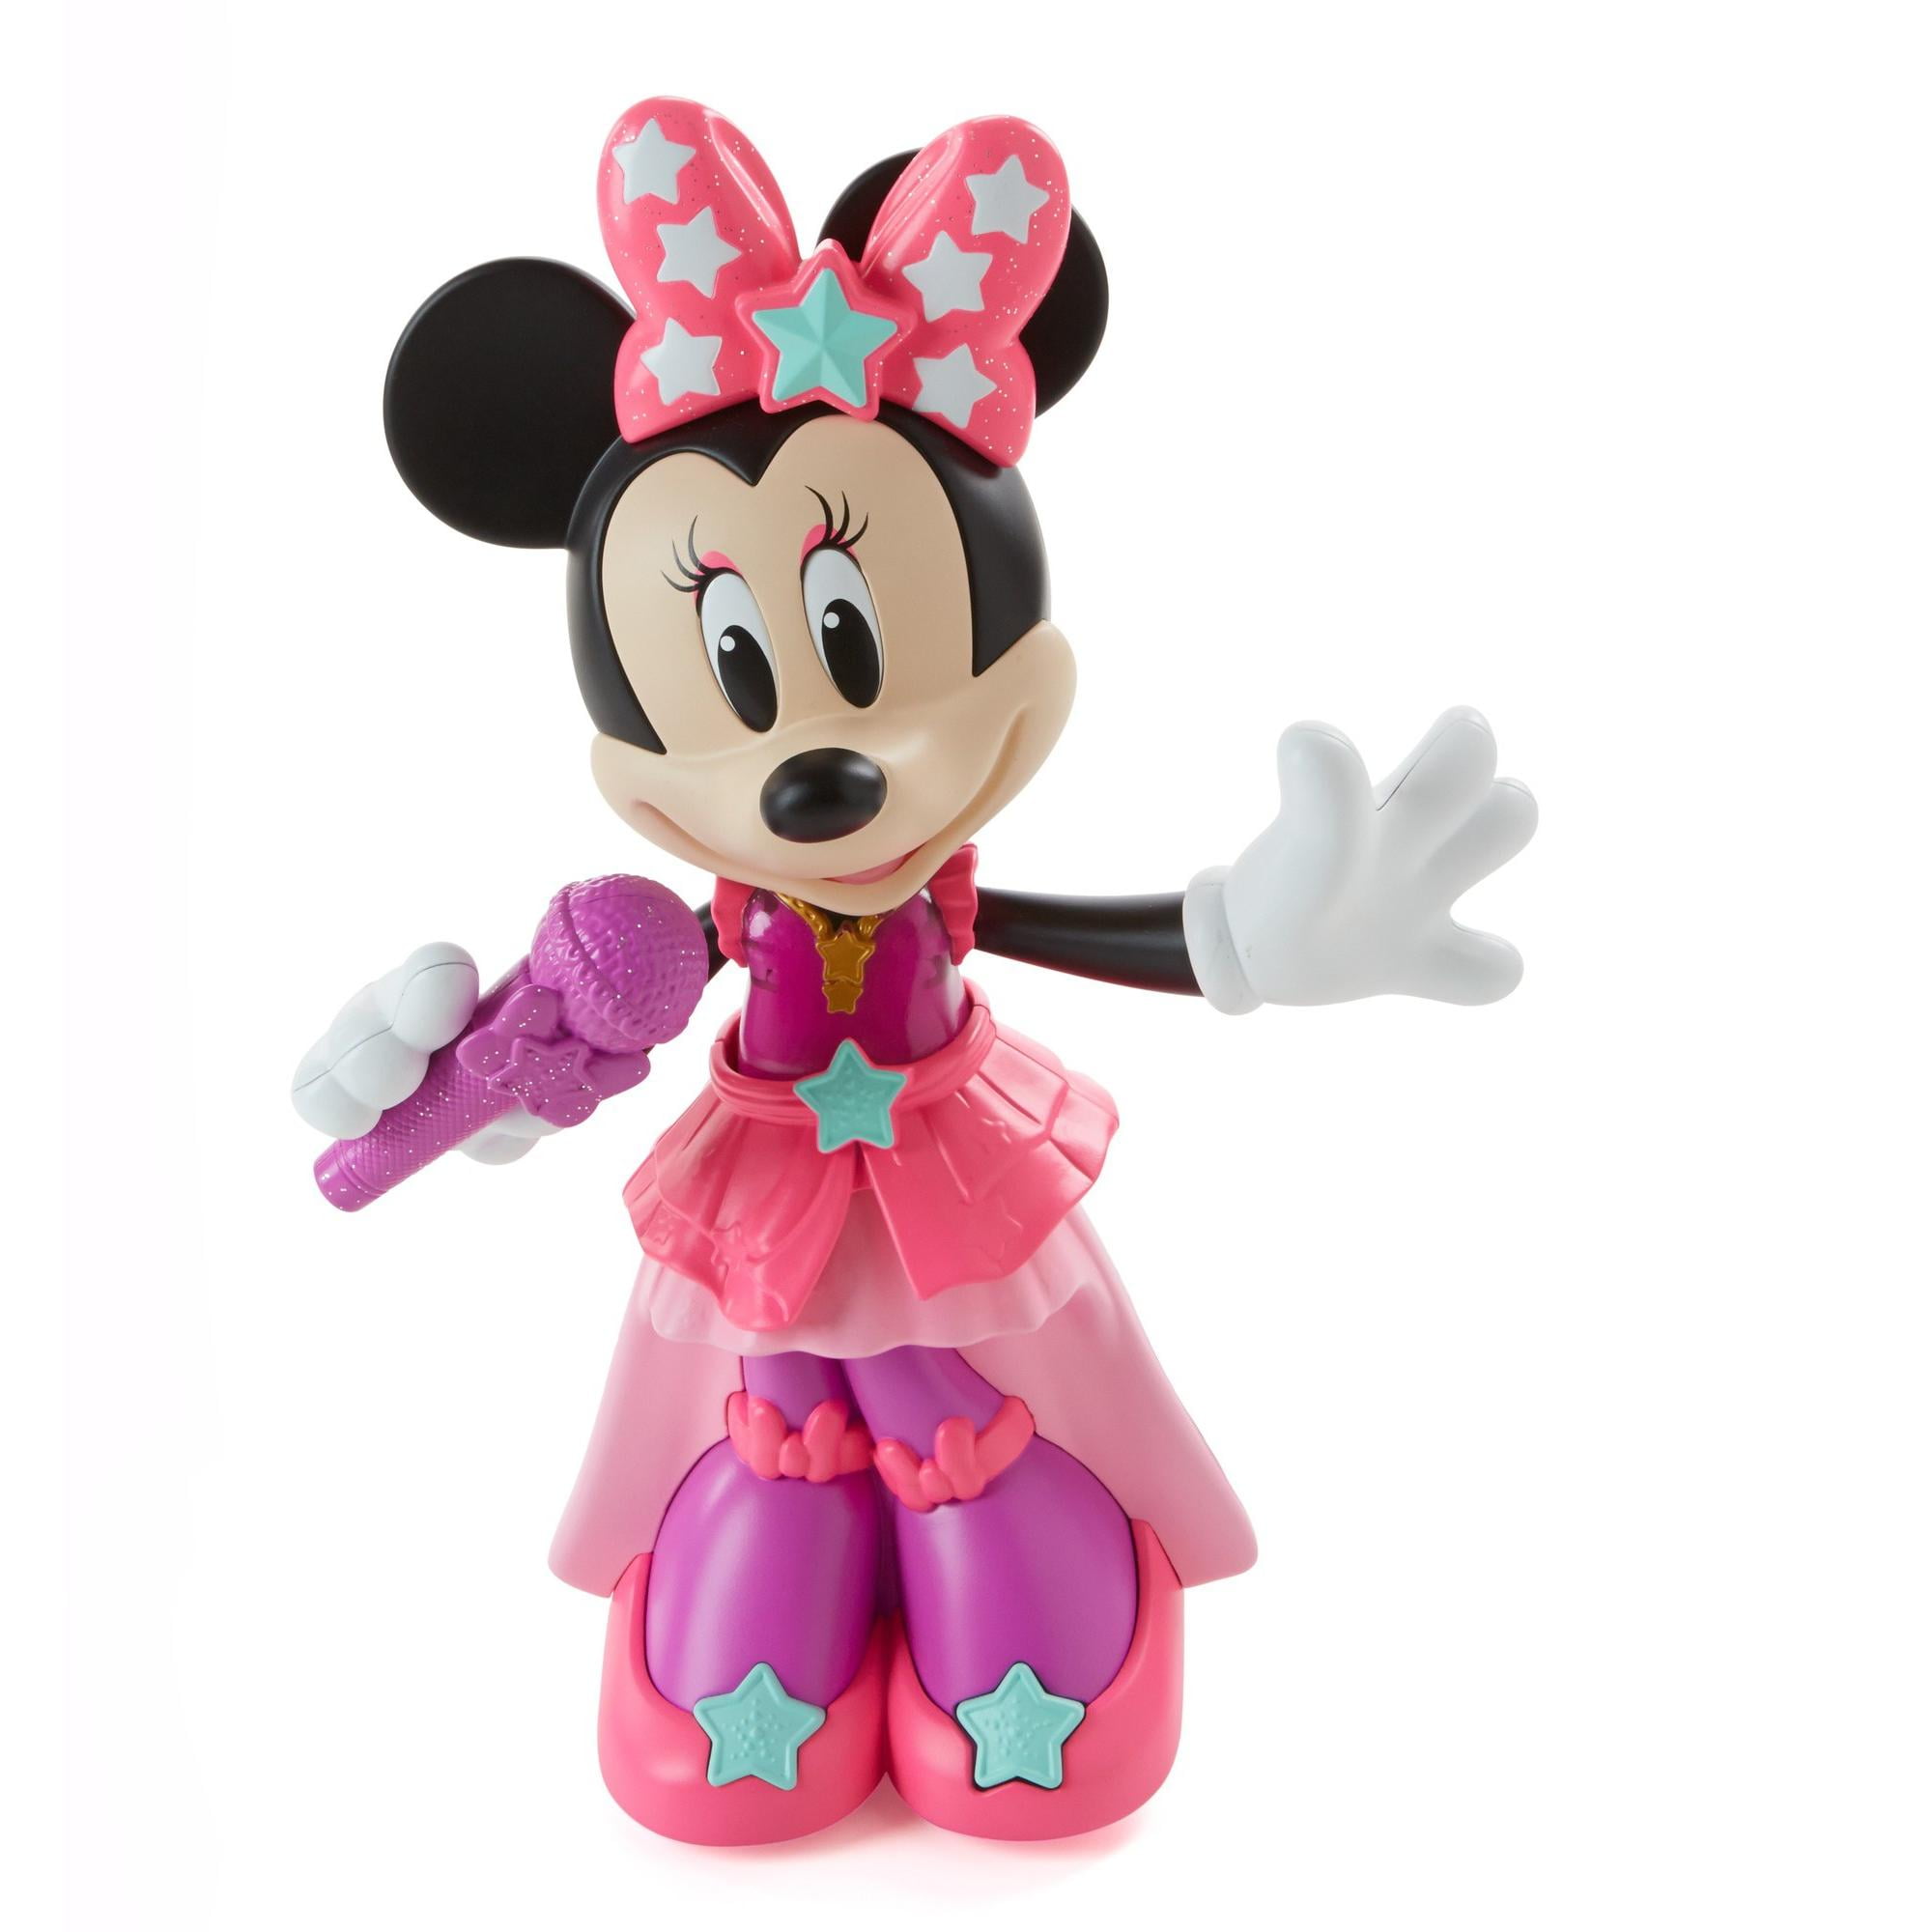 Official Disney Minnie Mouse Superstar Pink Umbrella